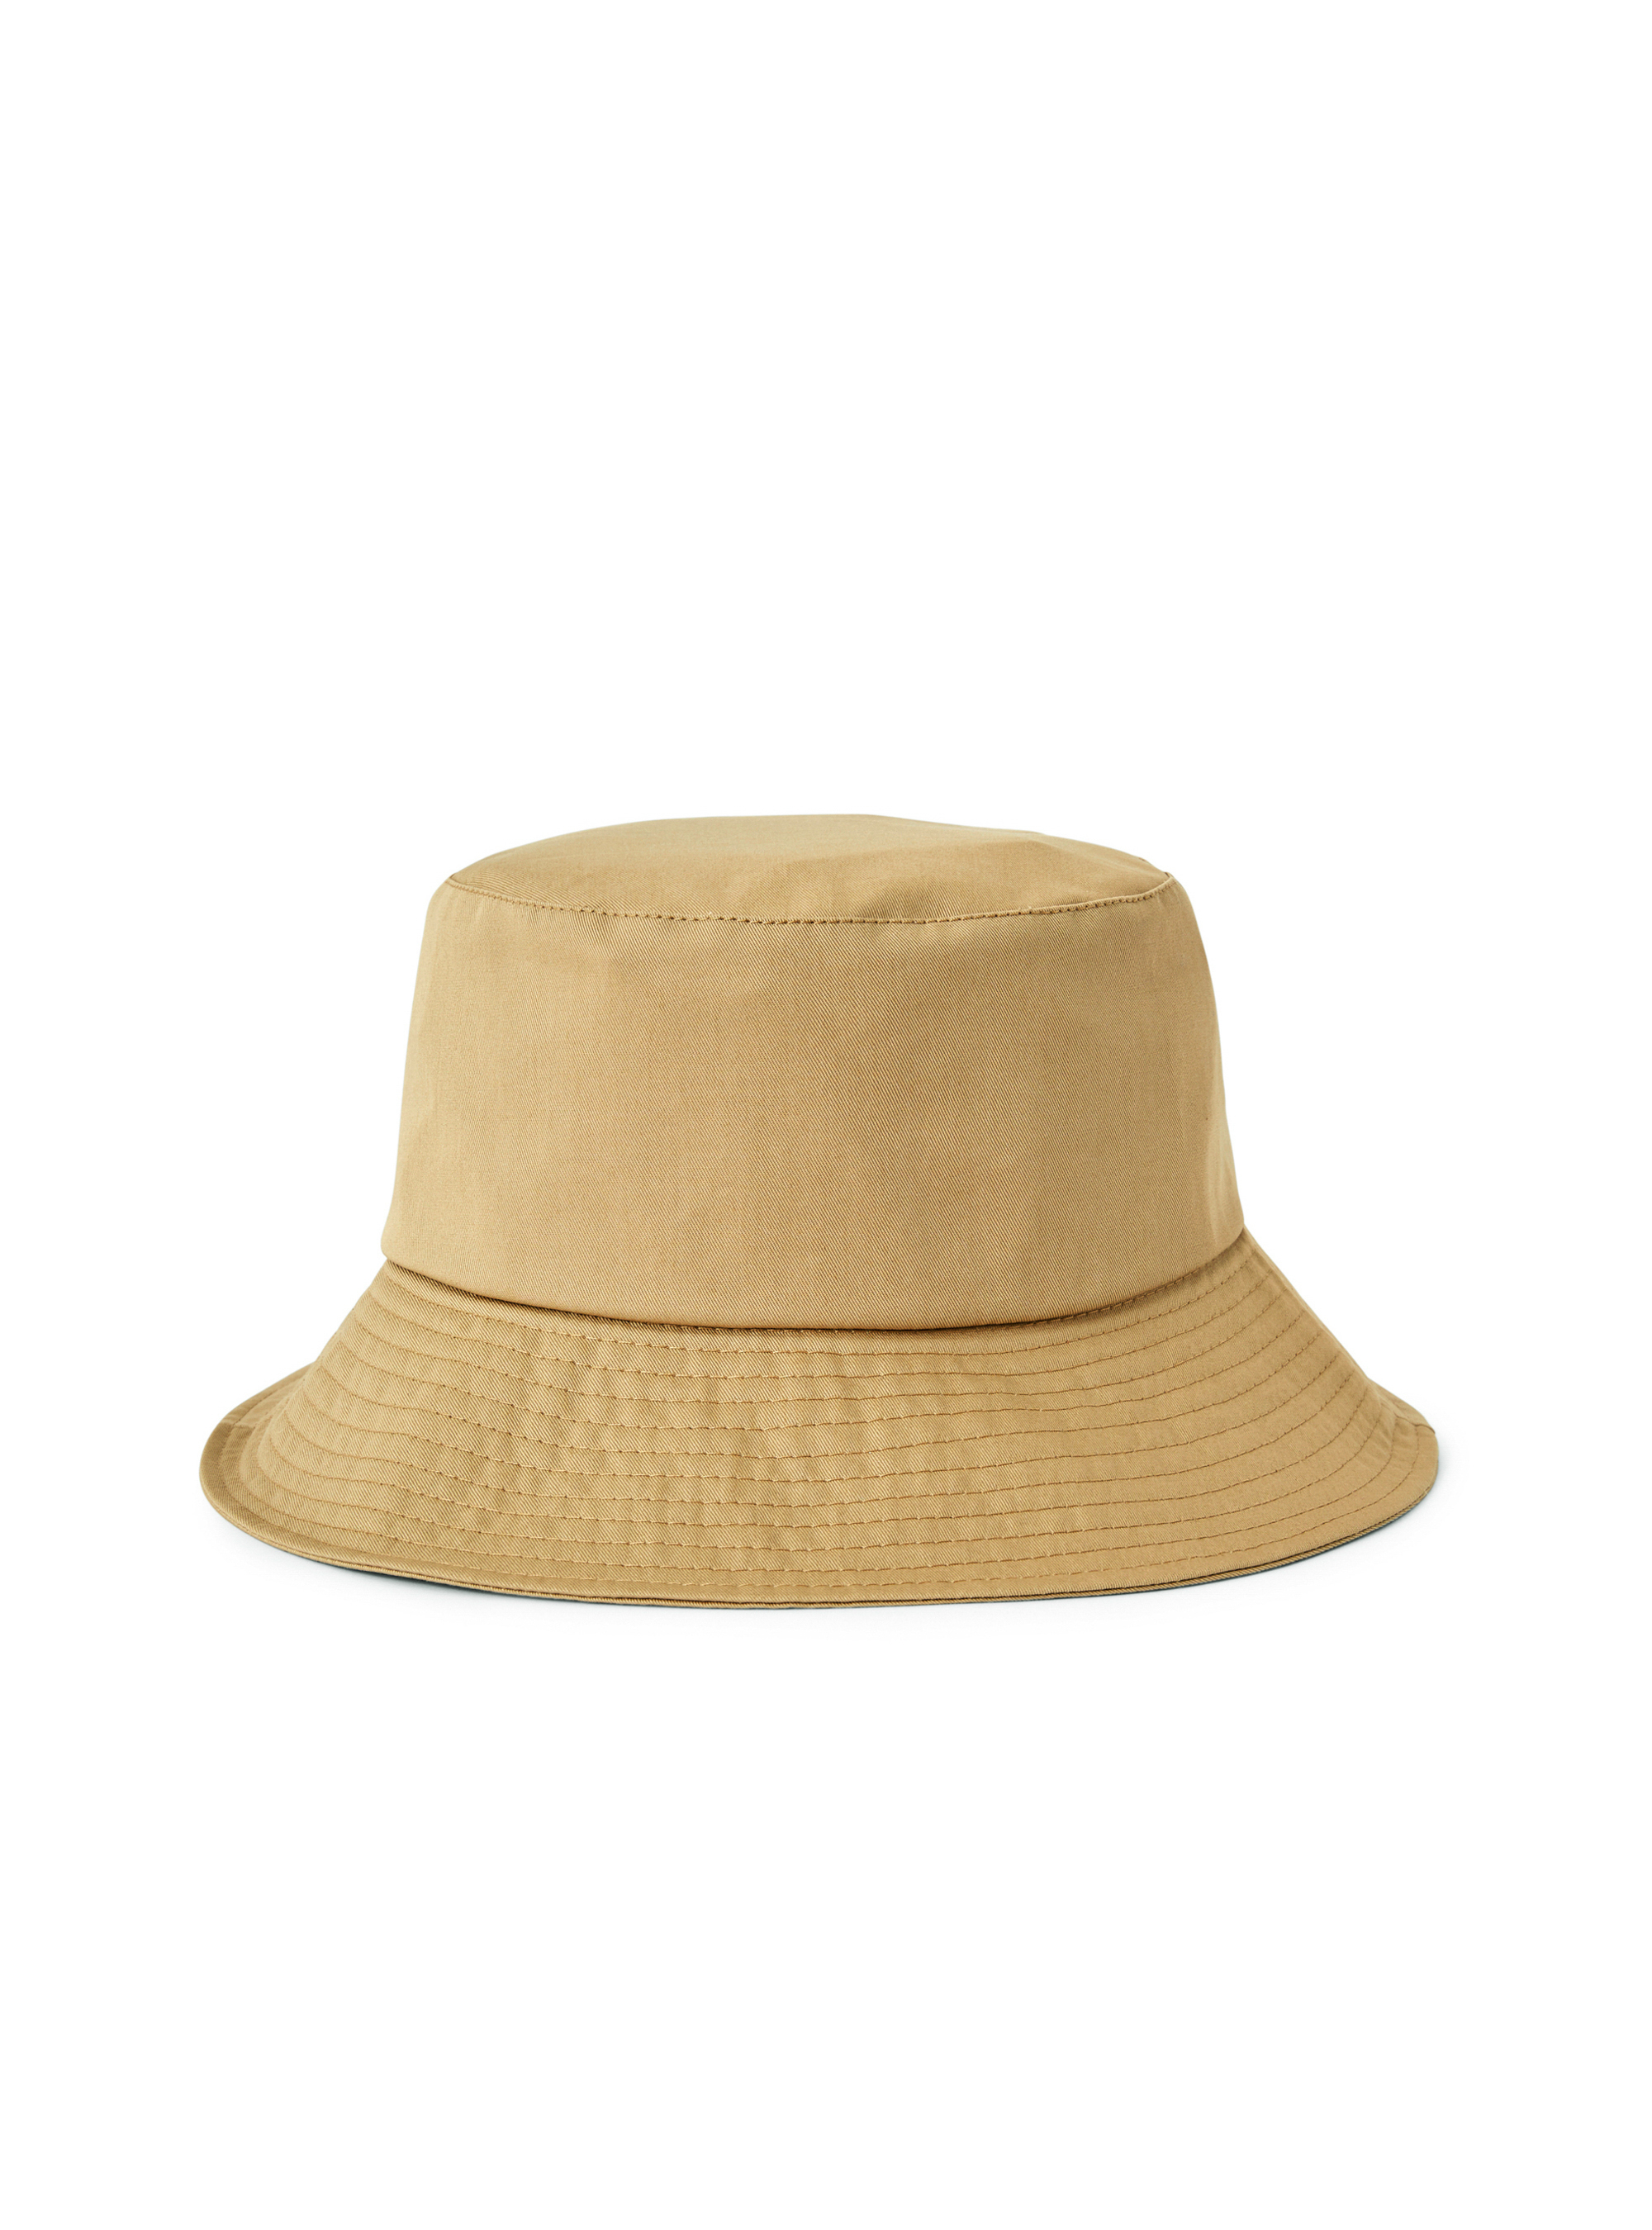 Beige cotton fisherman hat - Accessories - Il Gufo